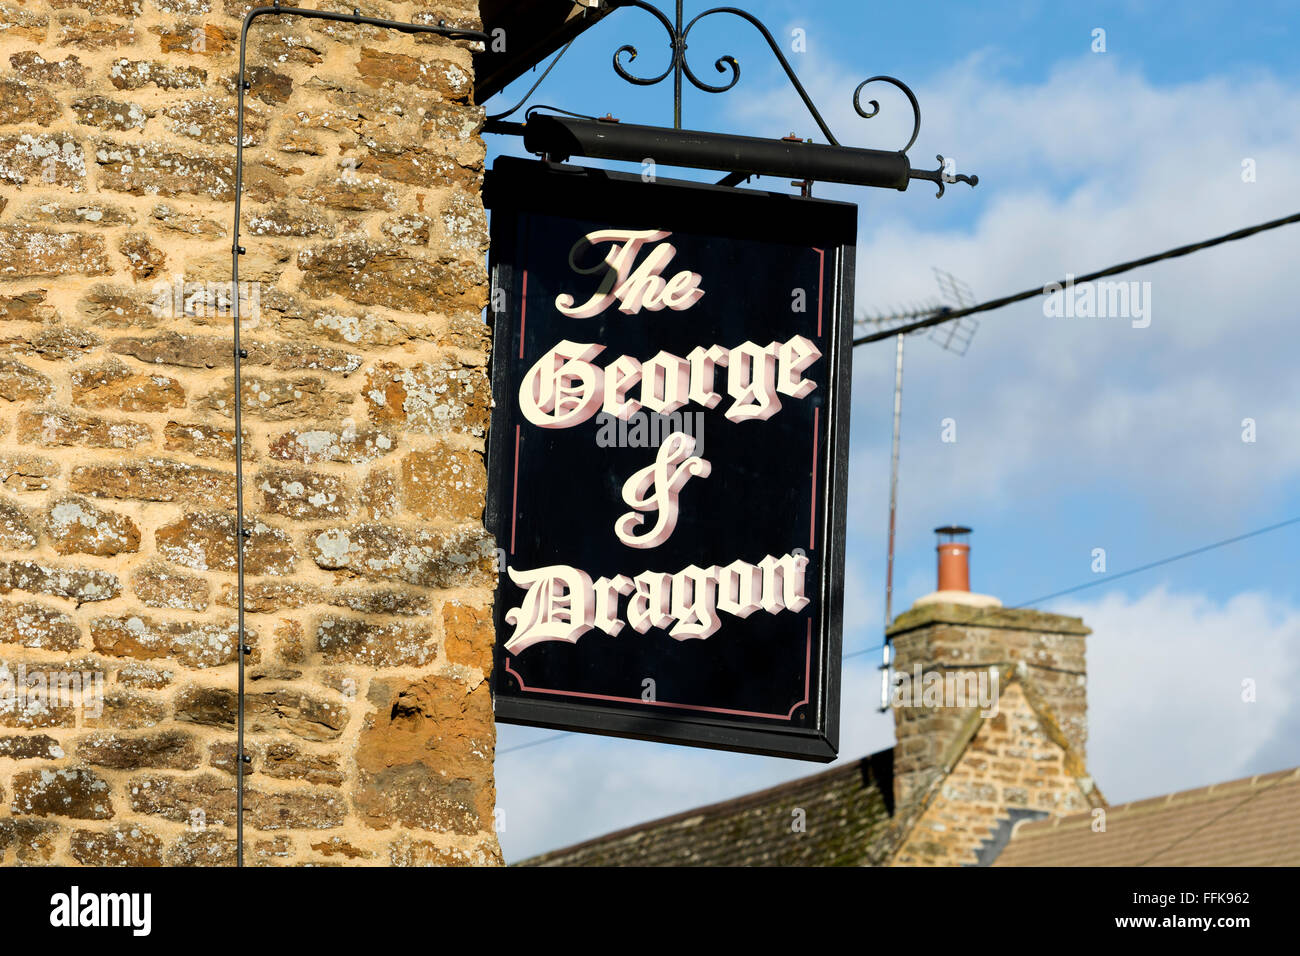 The George and Dragon pub sign, Chacombe, Northamptonshire, England, UK Stock Photo